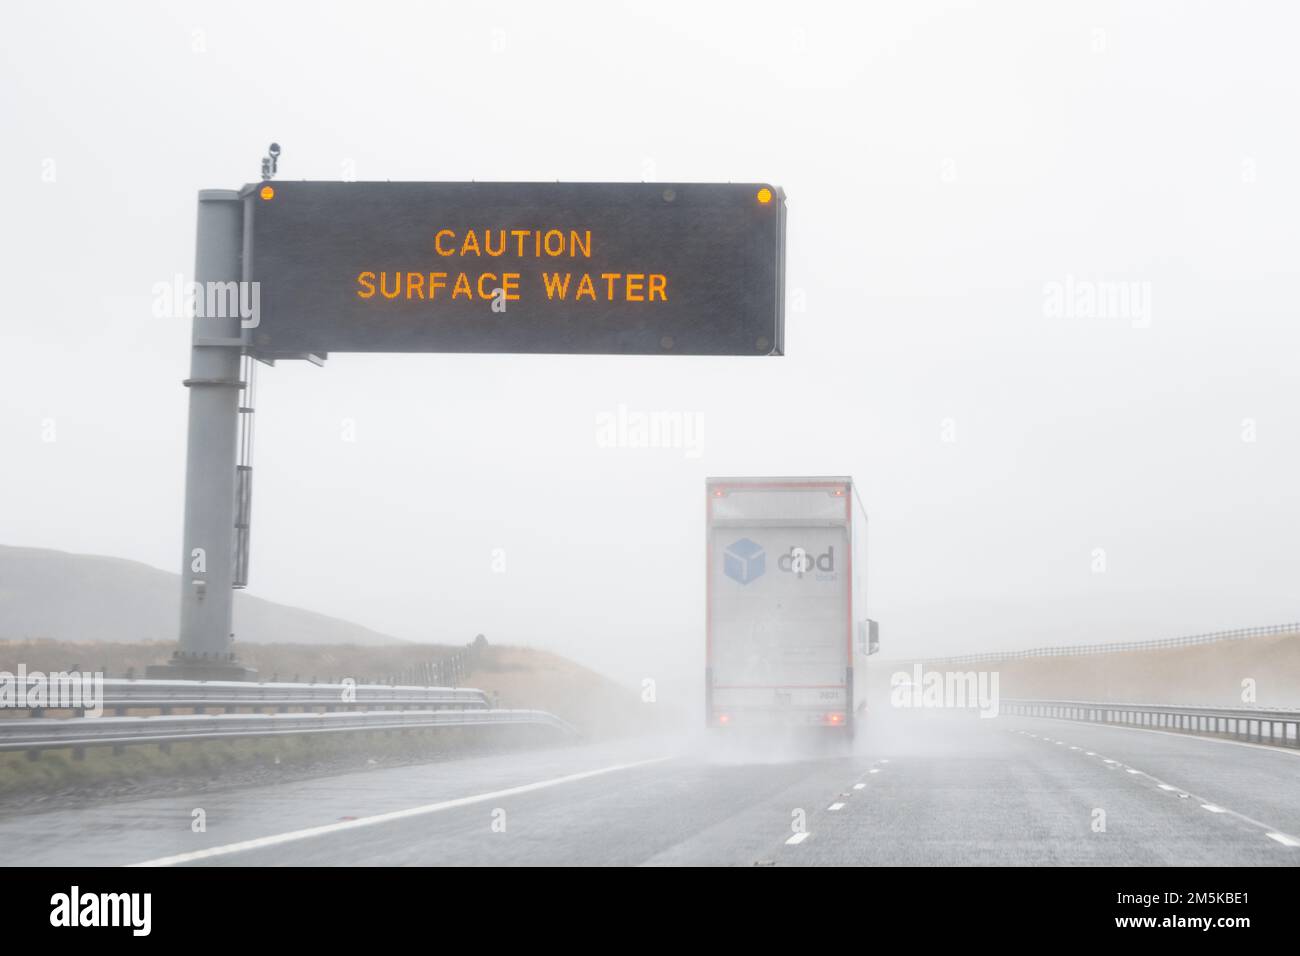 Caution Surface Water motorway sign, UK Stock Photo